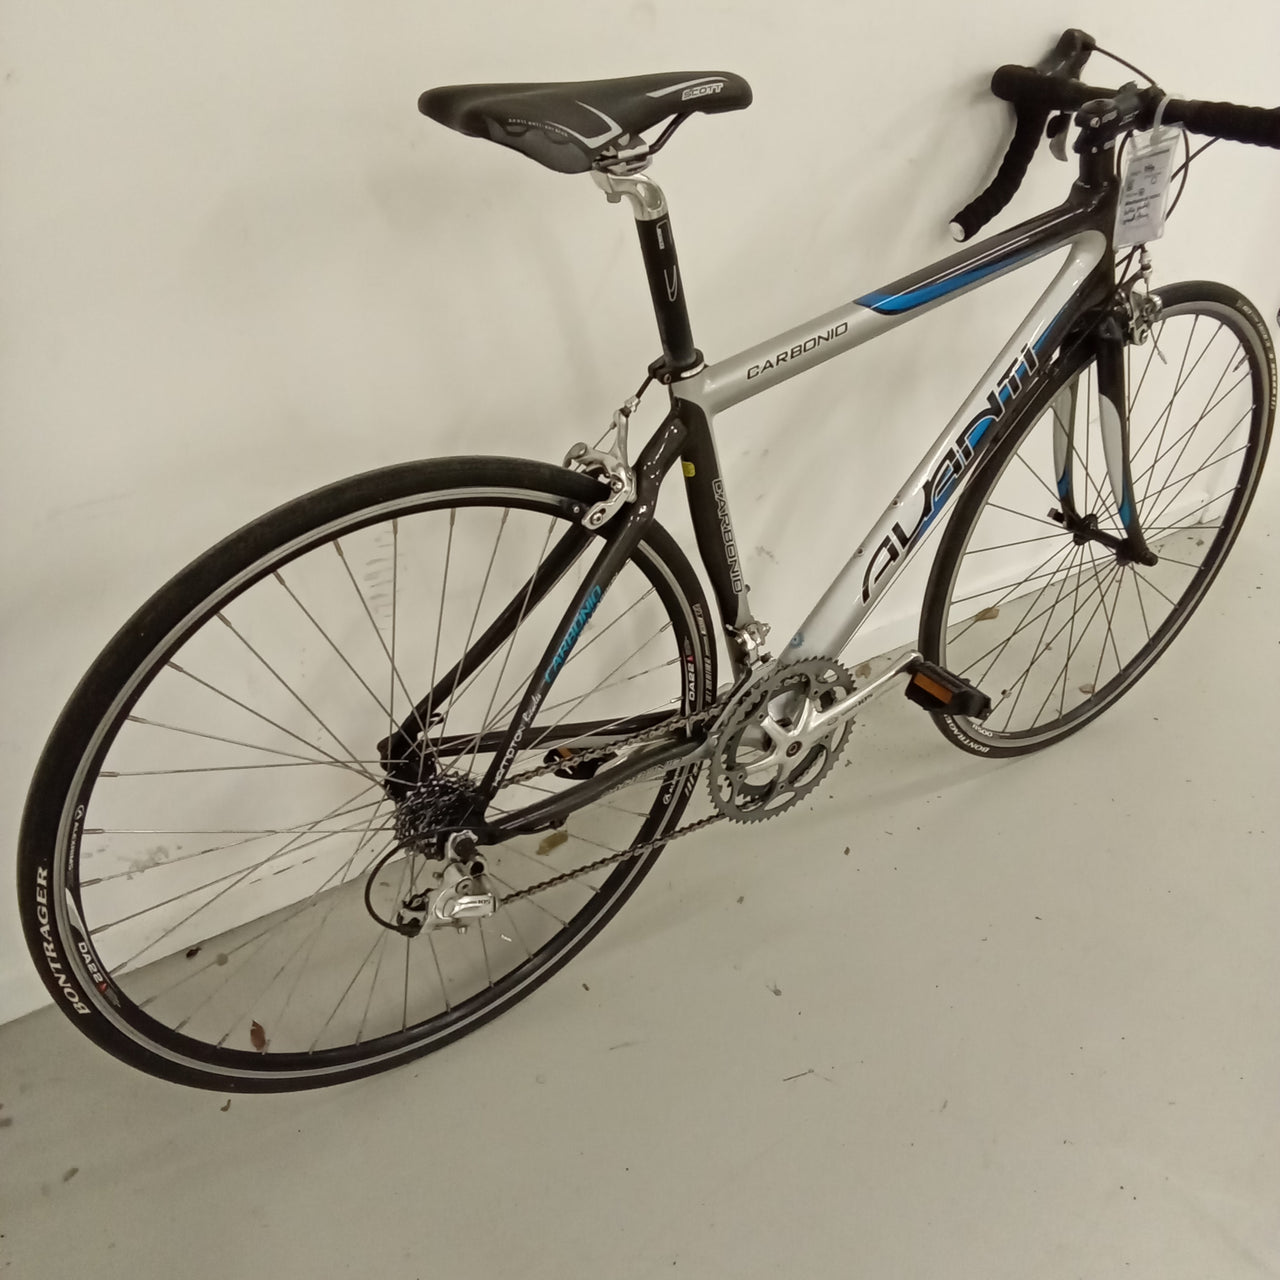 818 - 48cm Silver,
Carbon Road Bike, Bike